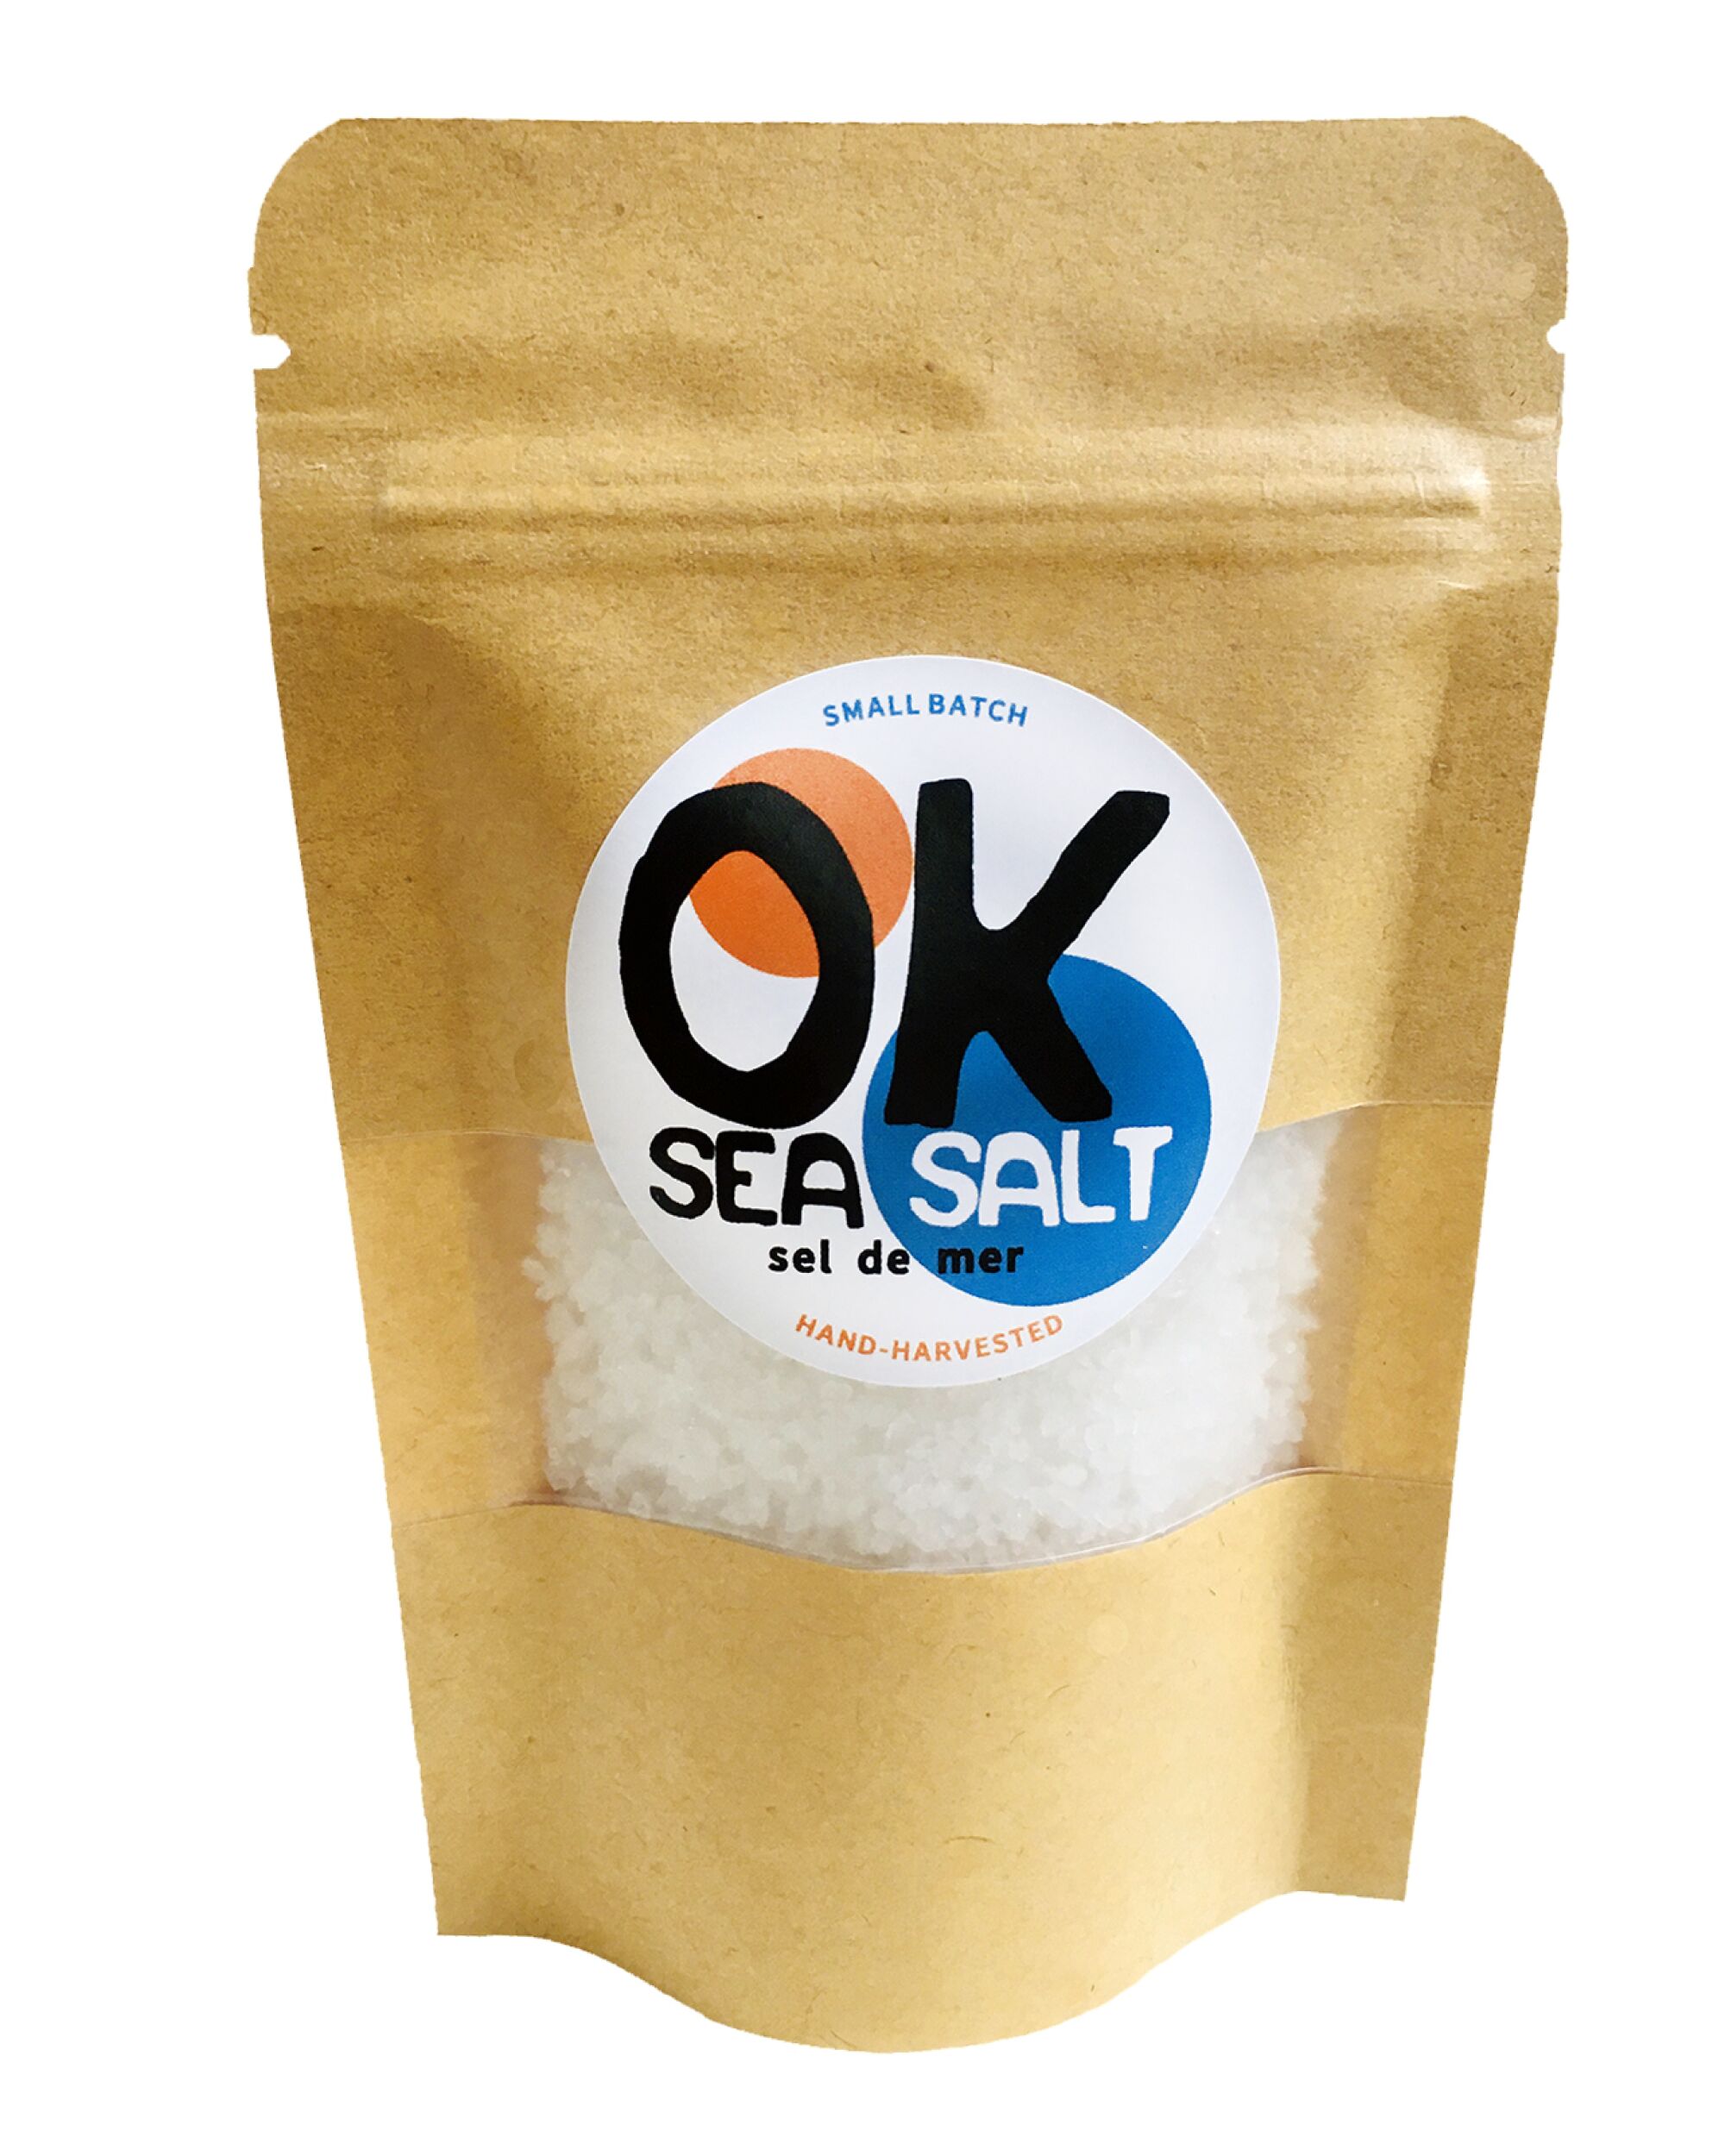 OK Sea Salt package